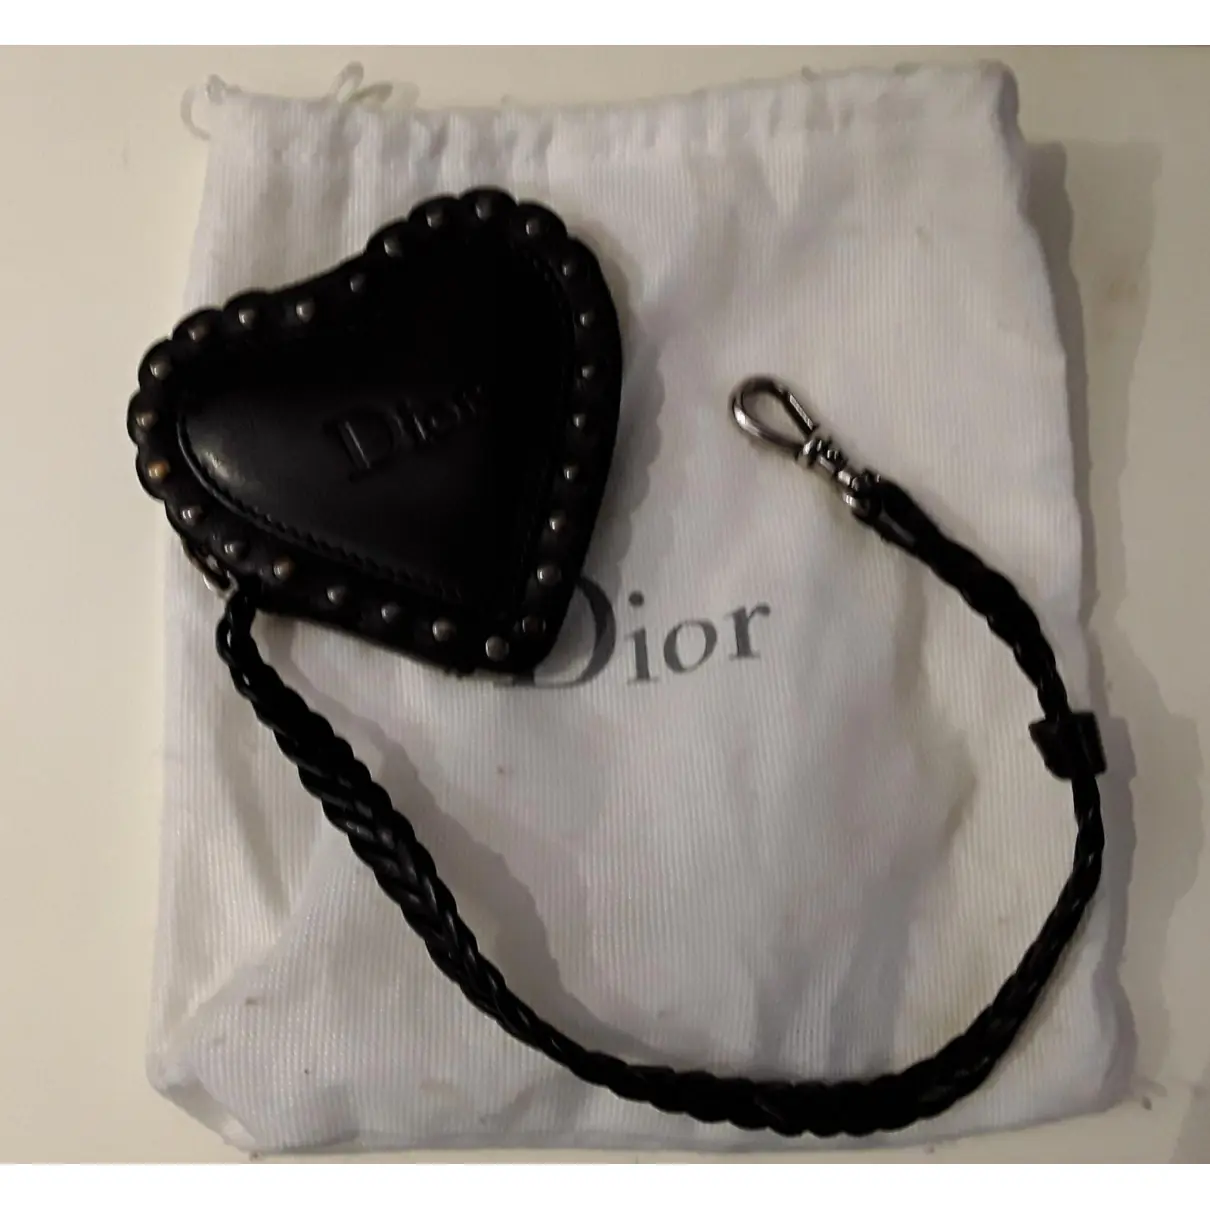 Leather purse Dior - Vintage